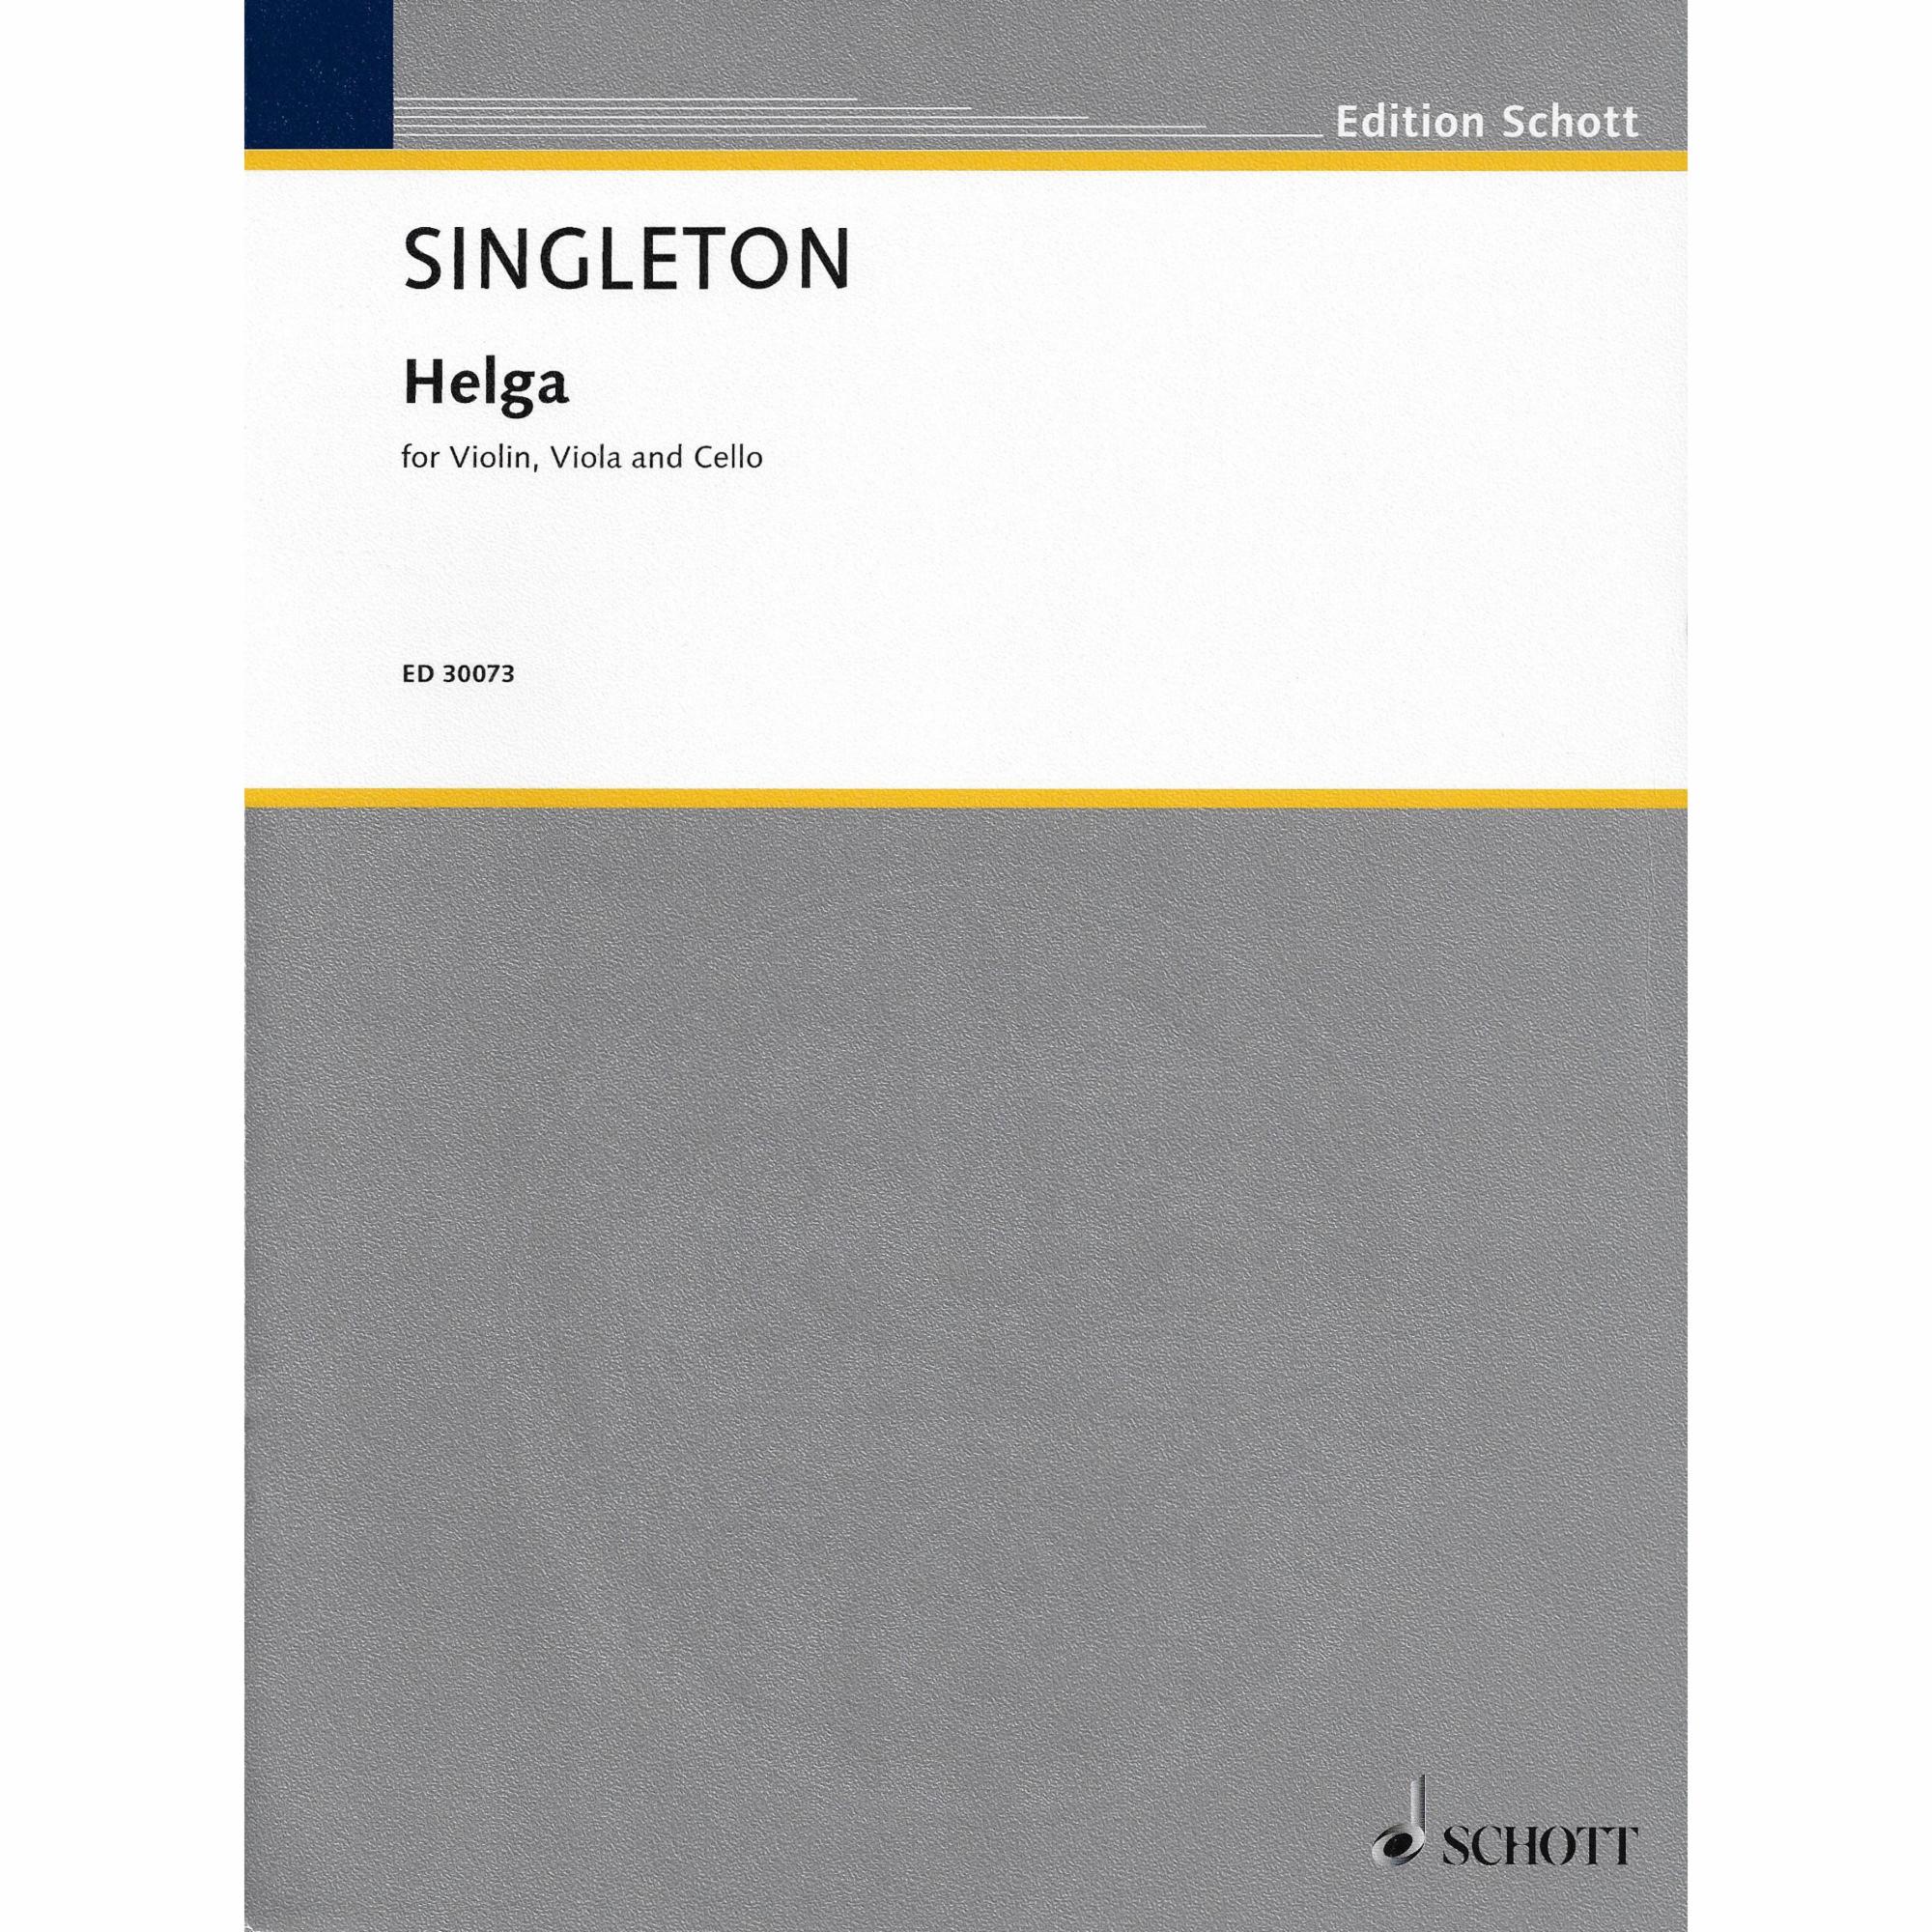 Singleton -- Helga for Violin, Viola, and Cello